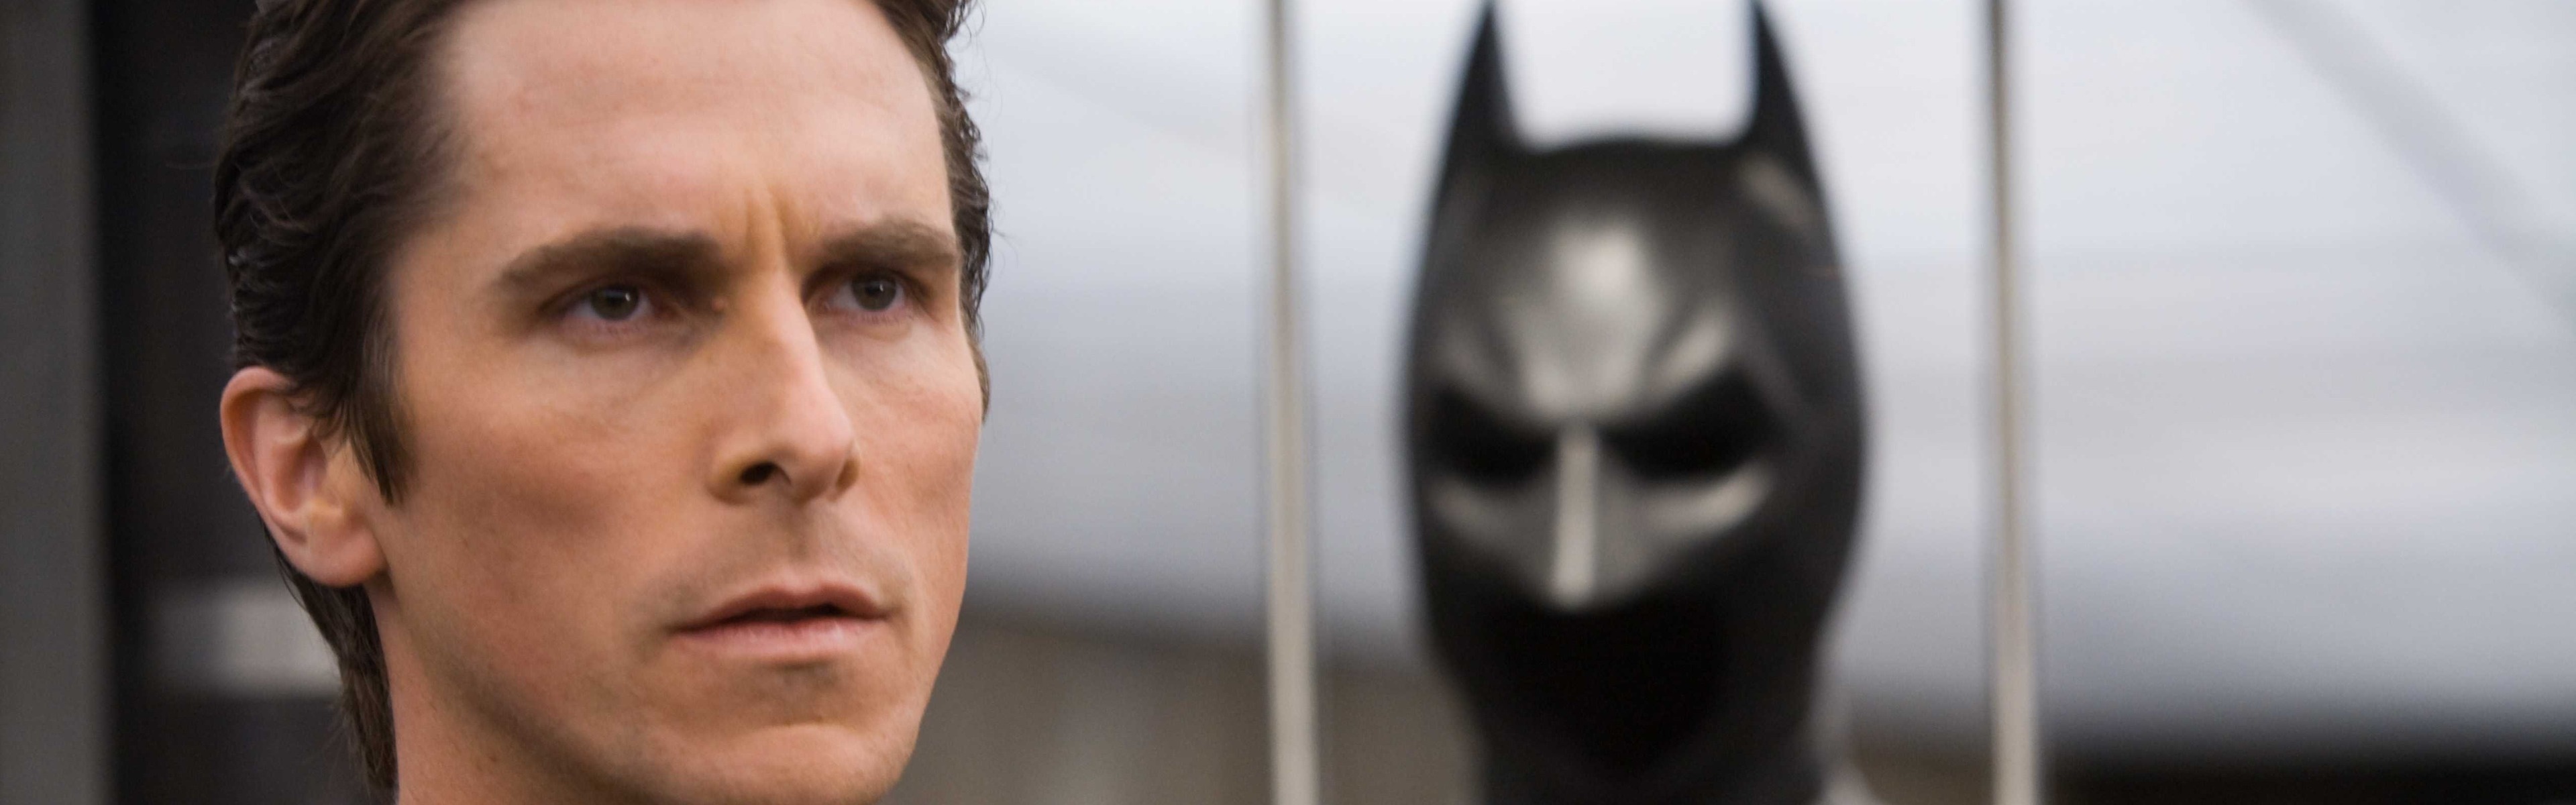 Christian Bale: Batman, The Dark Knight, Bruce Wayne. 3840x1200 Dual Screen Wallpaper.